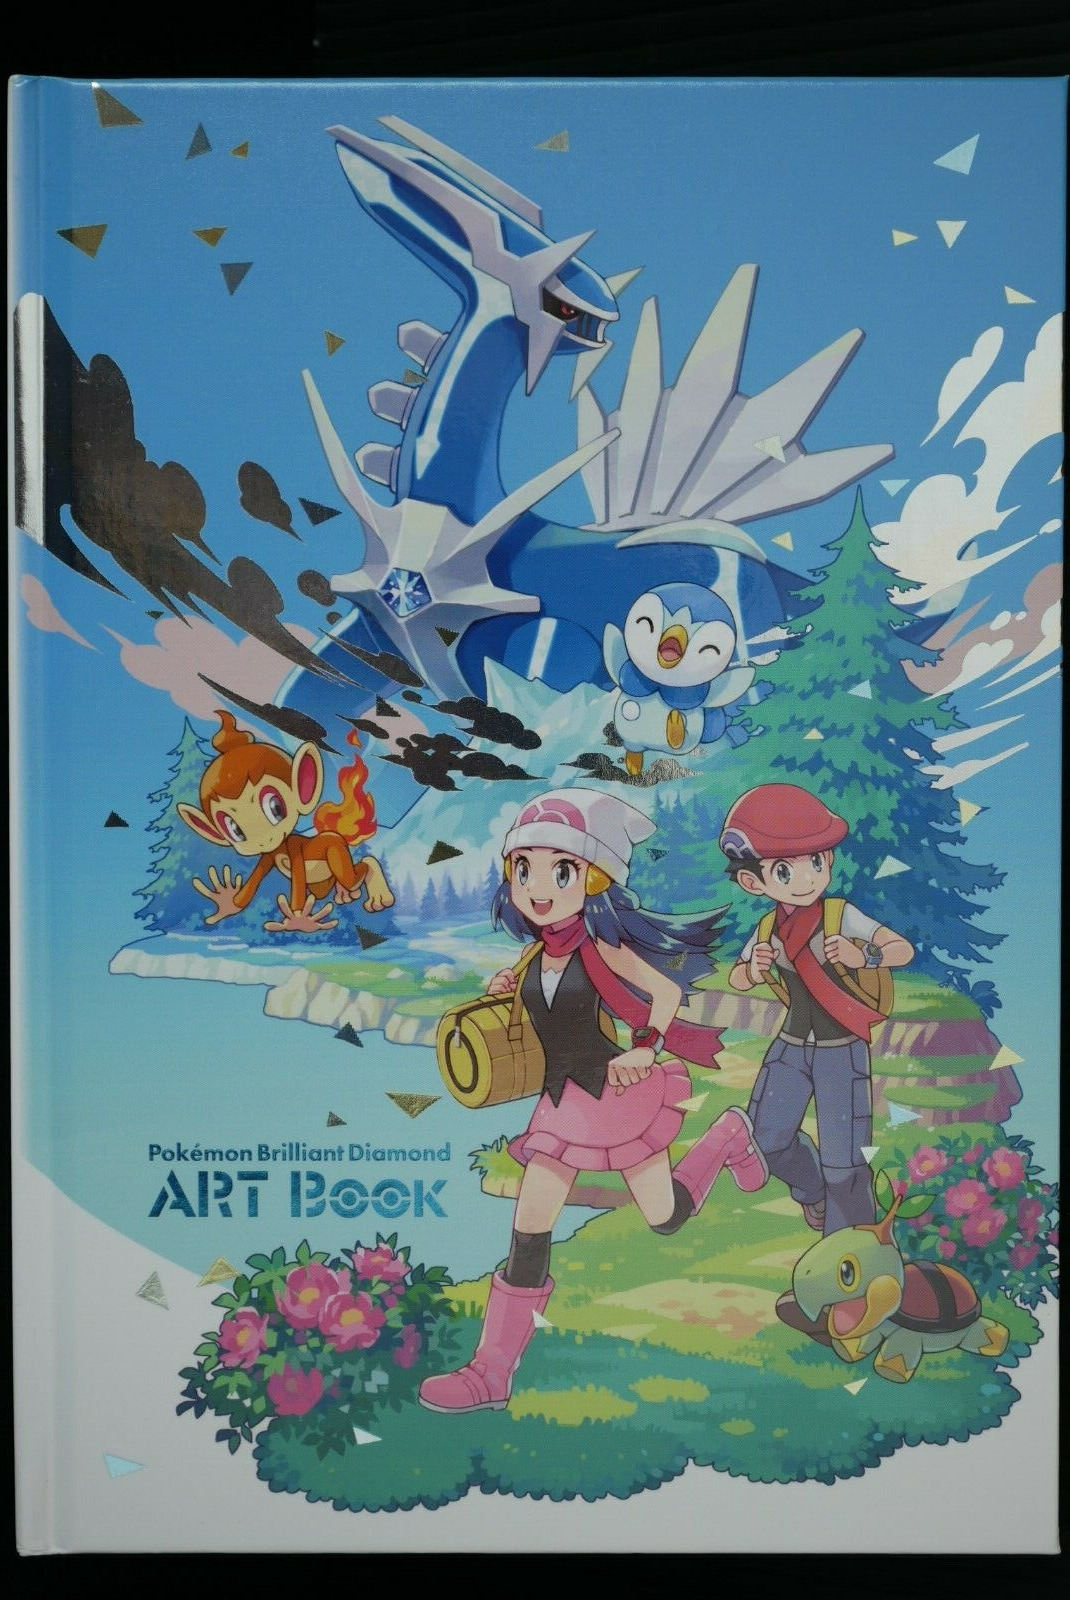 Pokemon Brilliant Diamond ART Book: Unique Artwork from the Japanese Game Series